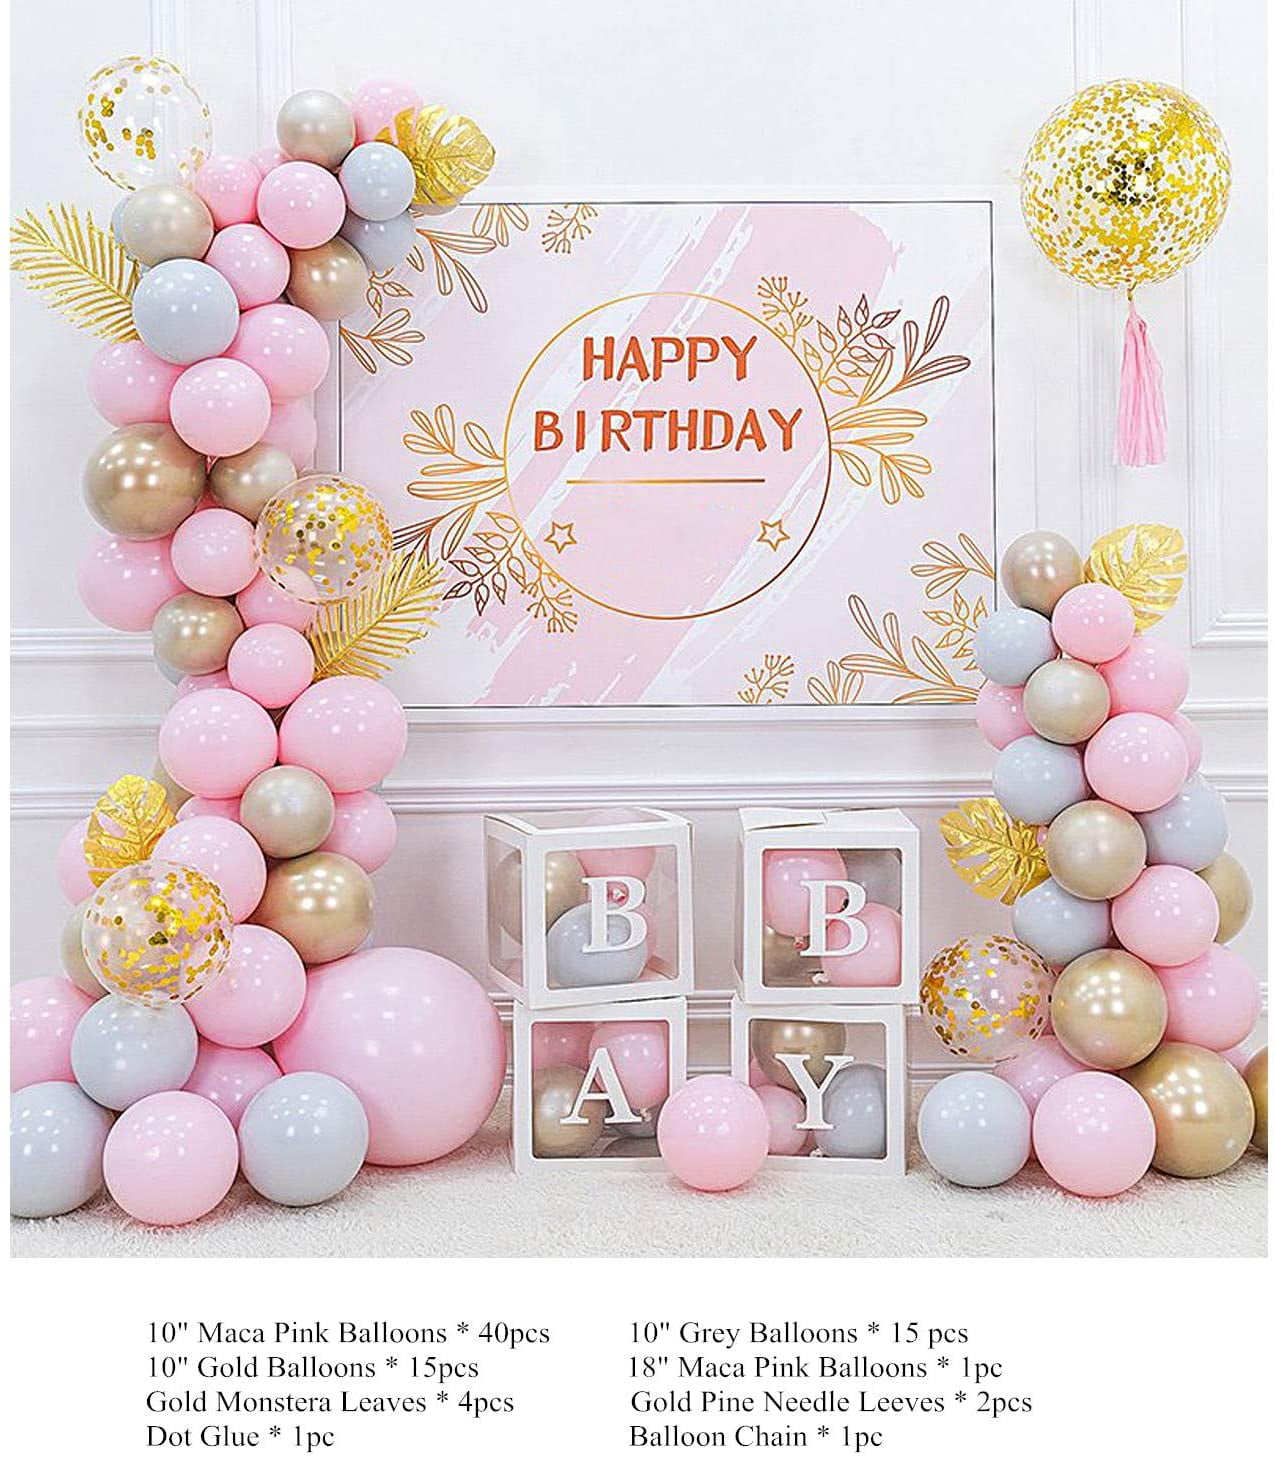 Details about   Macaron Balloon Arch Garland Kit Baby Shower Wedding Birthday Party Decor US 